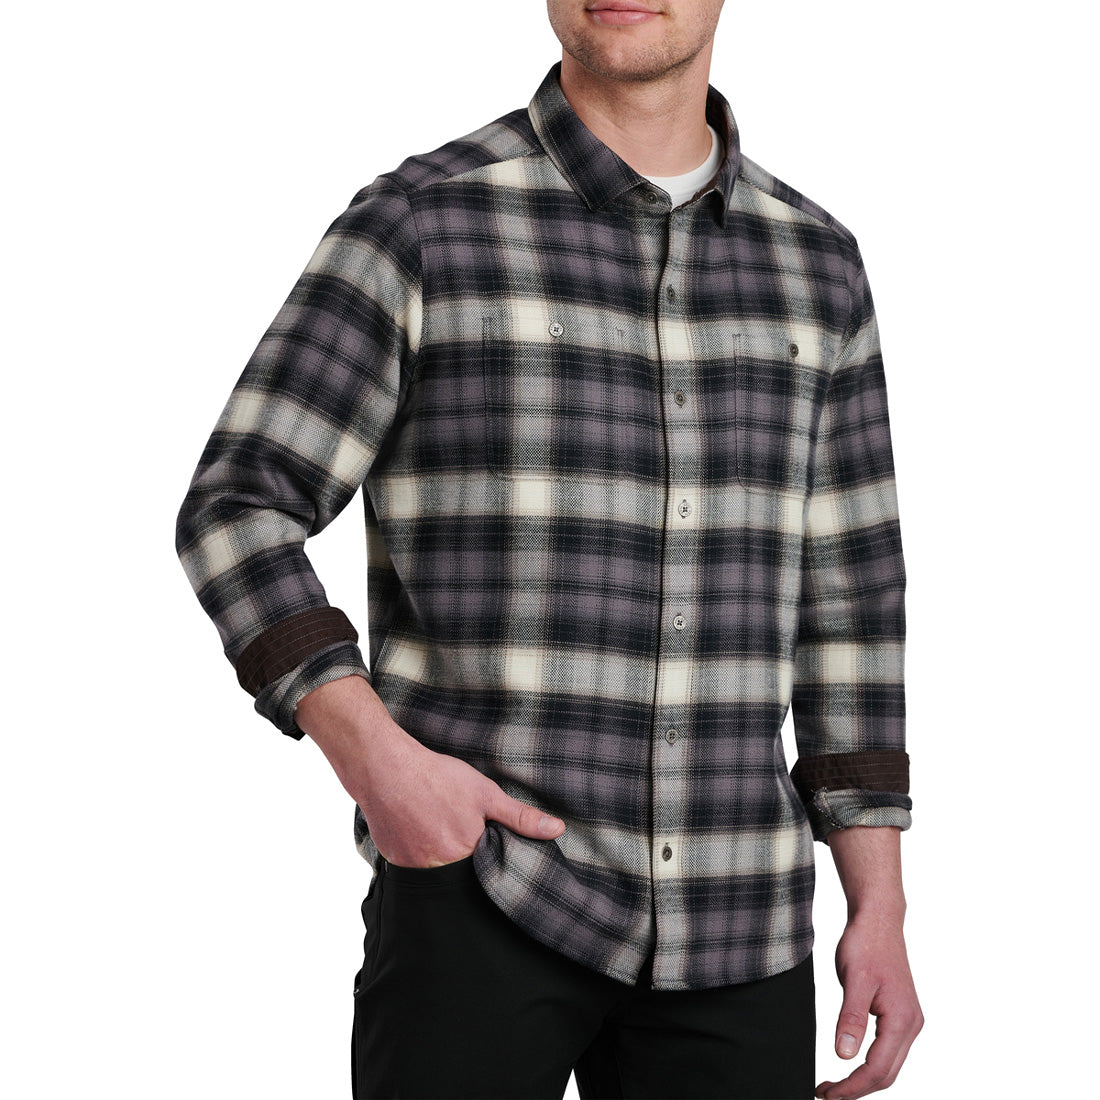 KUHL Law Flannel Shirt - Men's